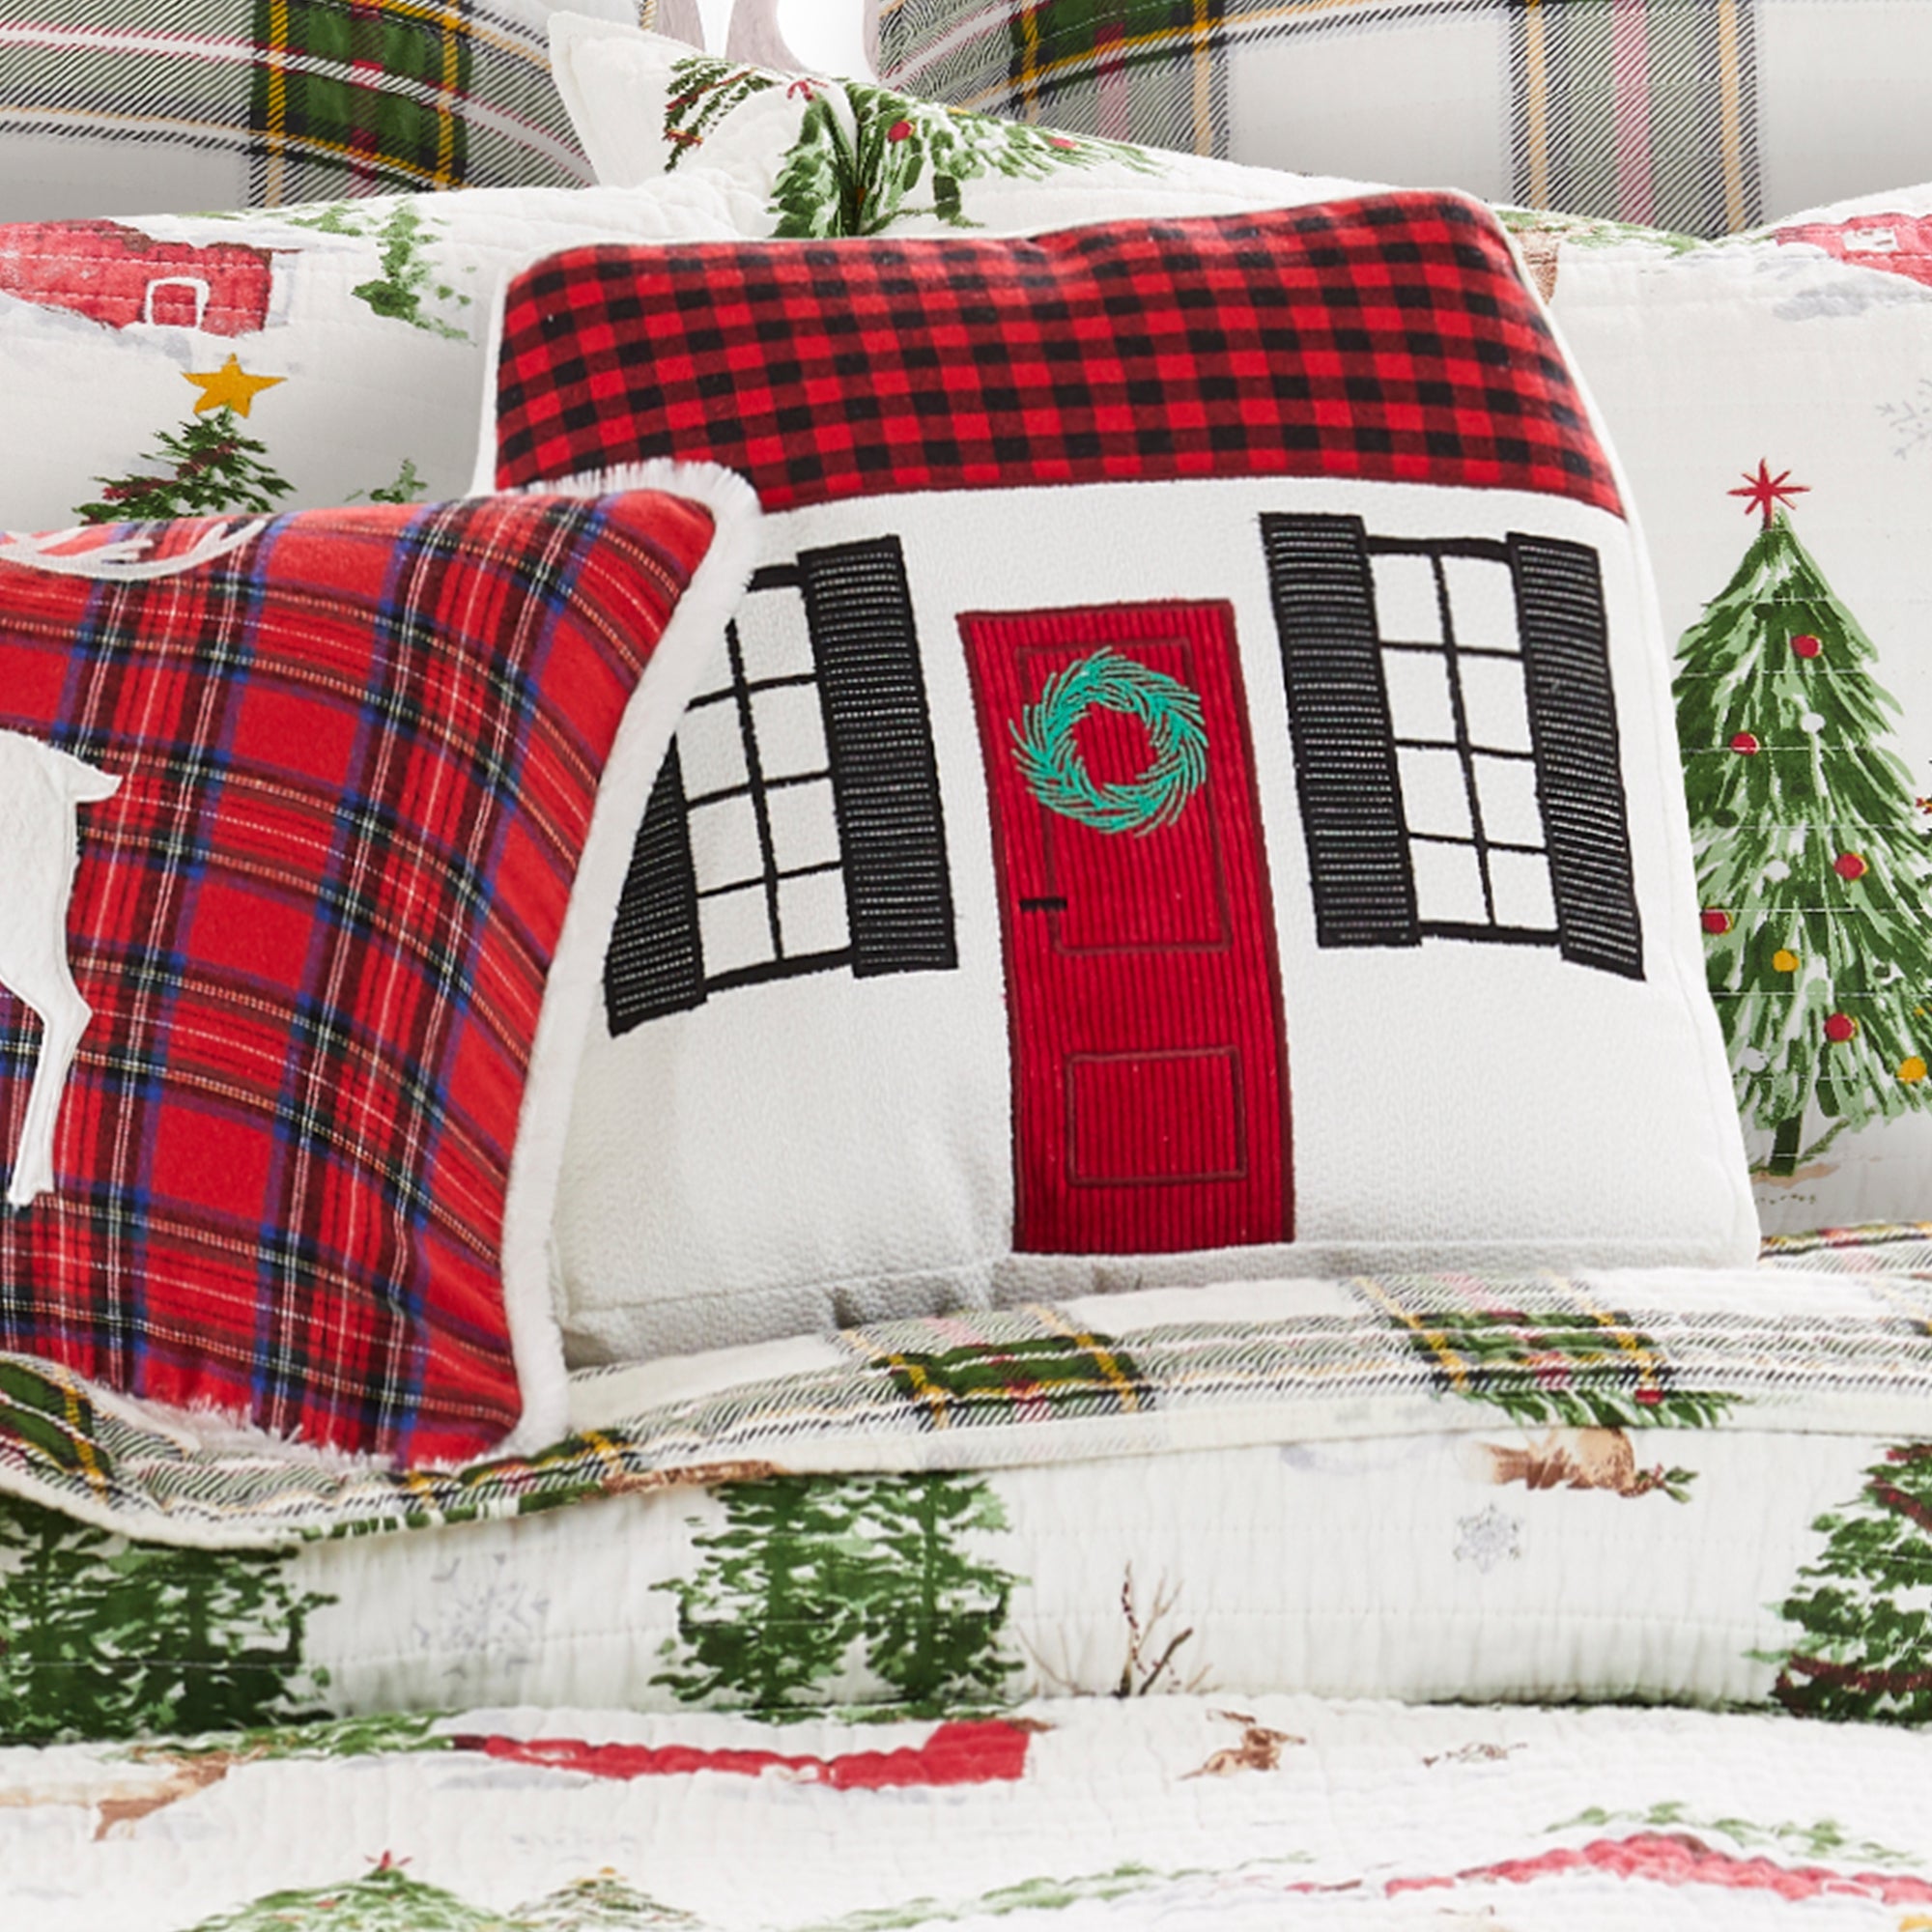 Tatum Pines Holiday Home Pillow